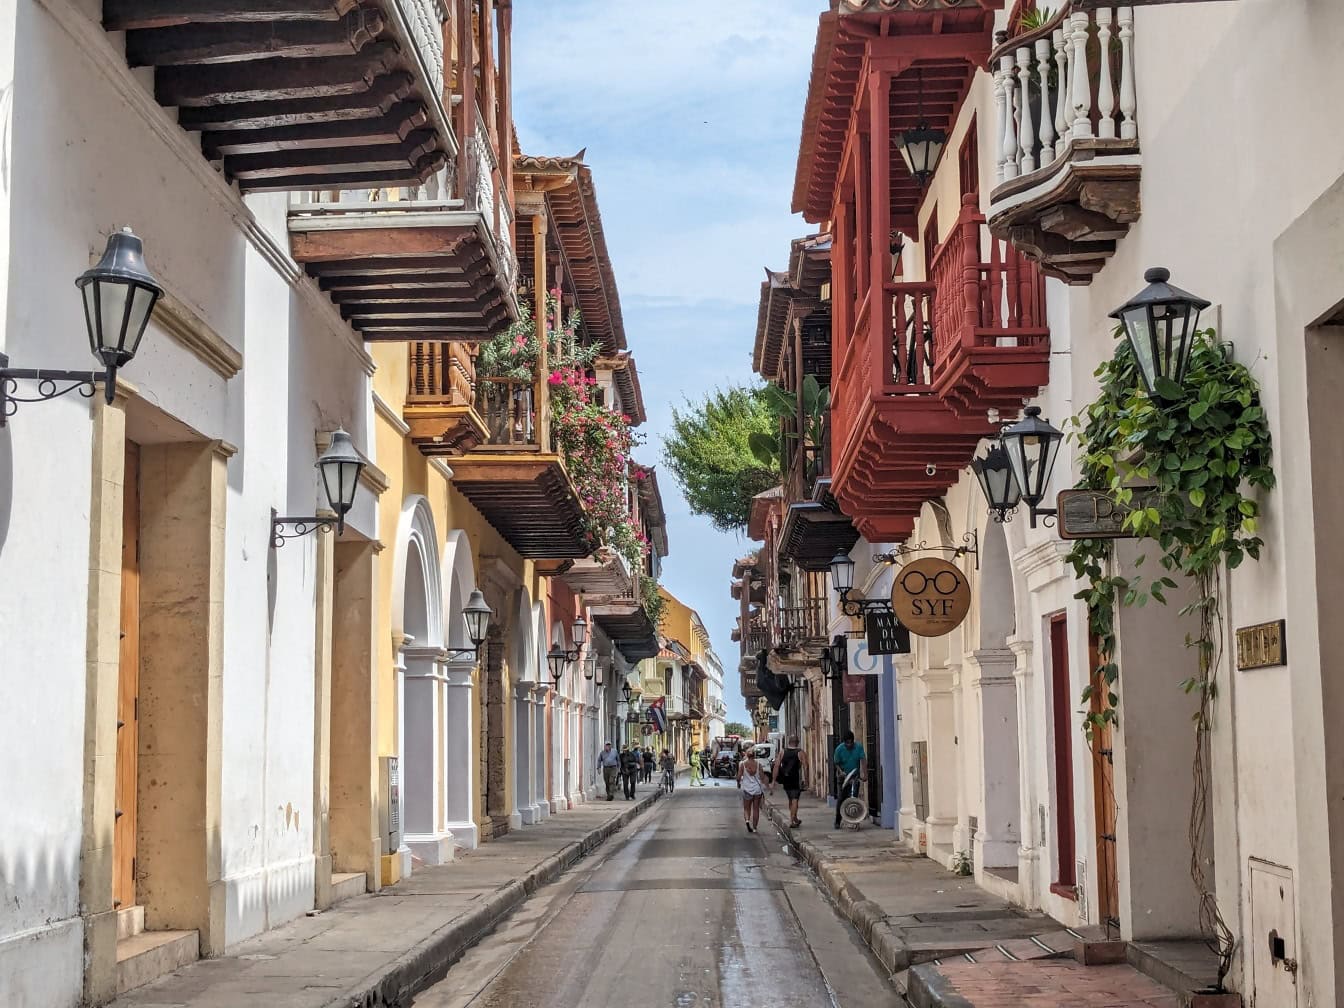 Ulica v starej časti mesta Cartagena v Kolumbii